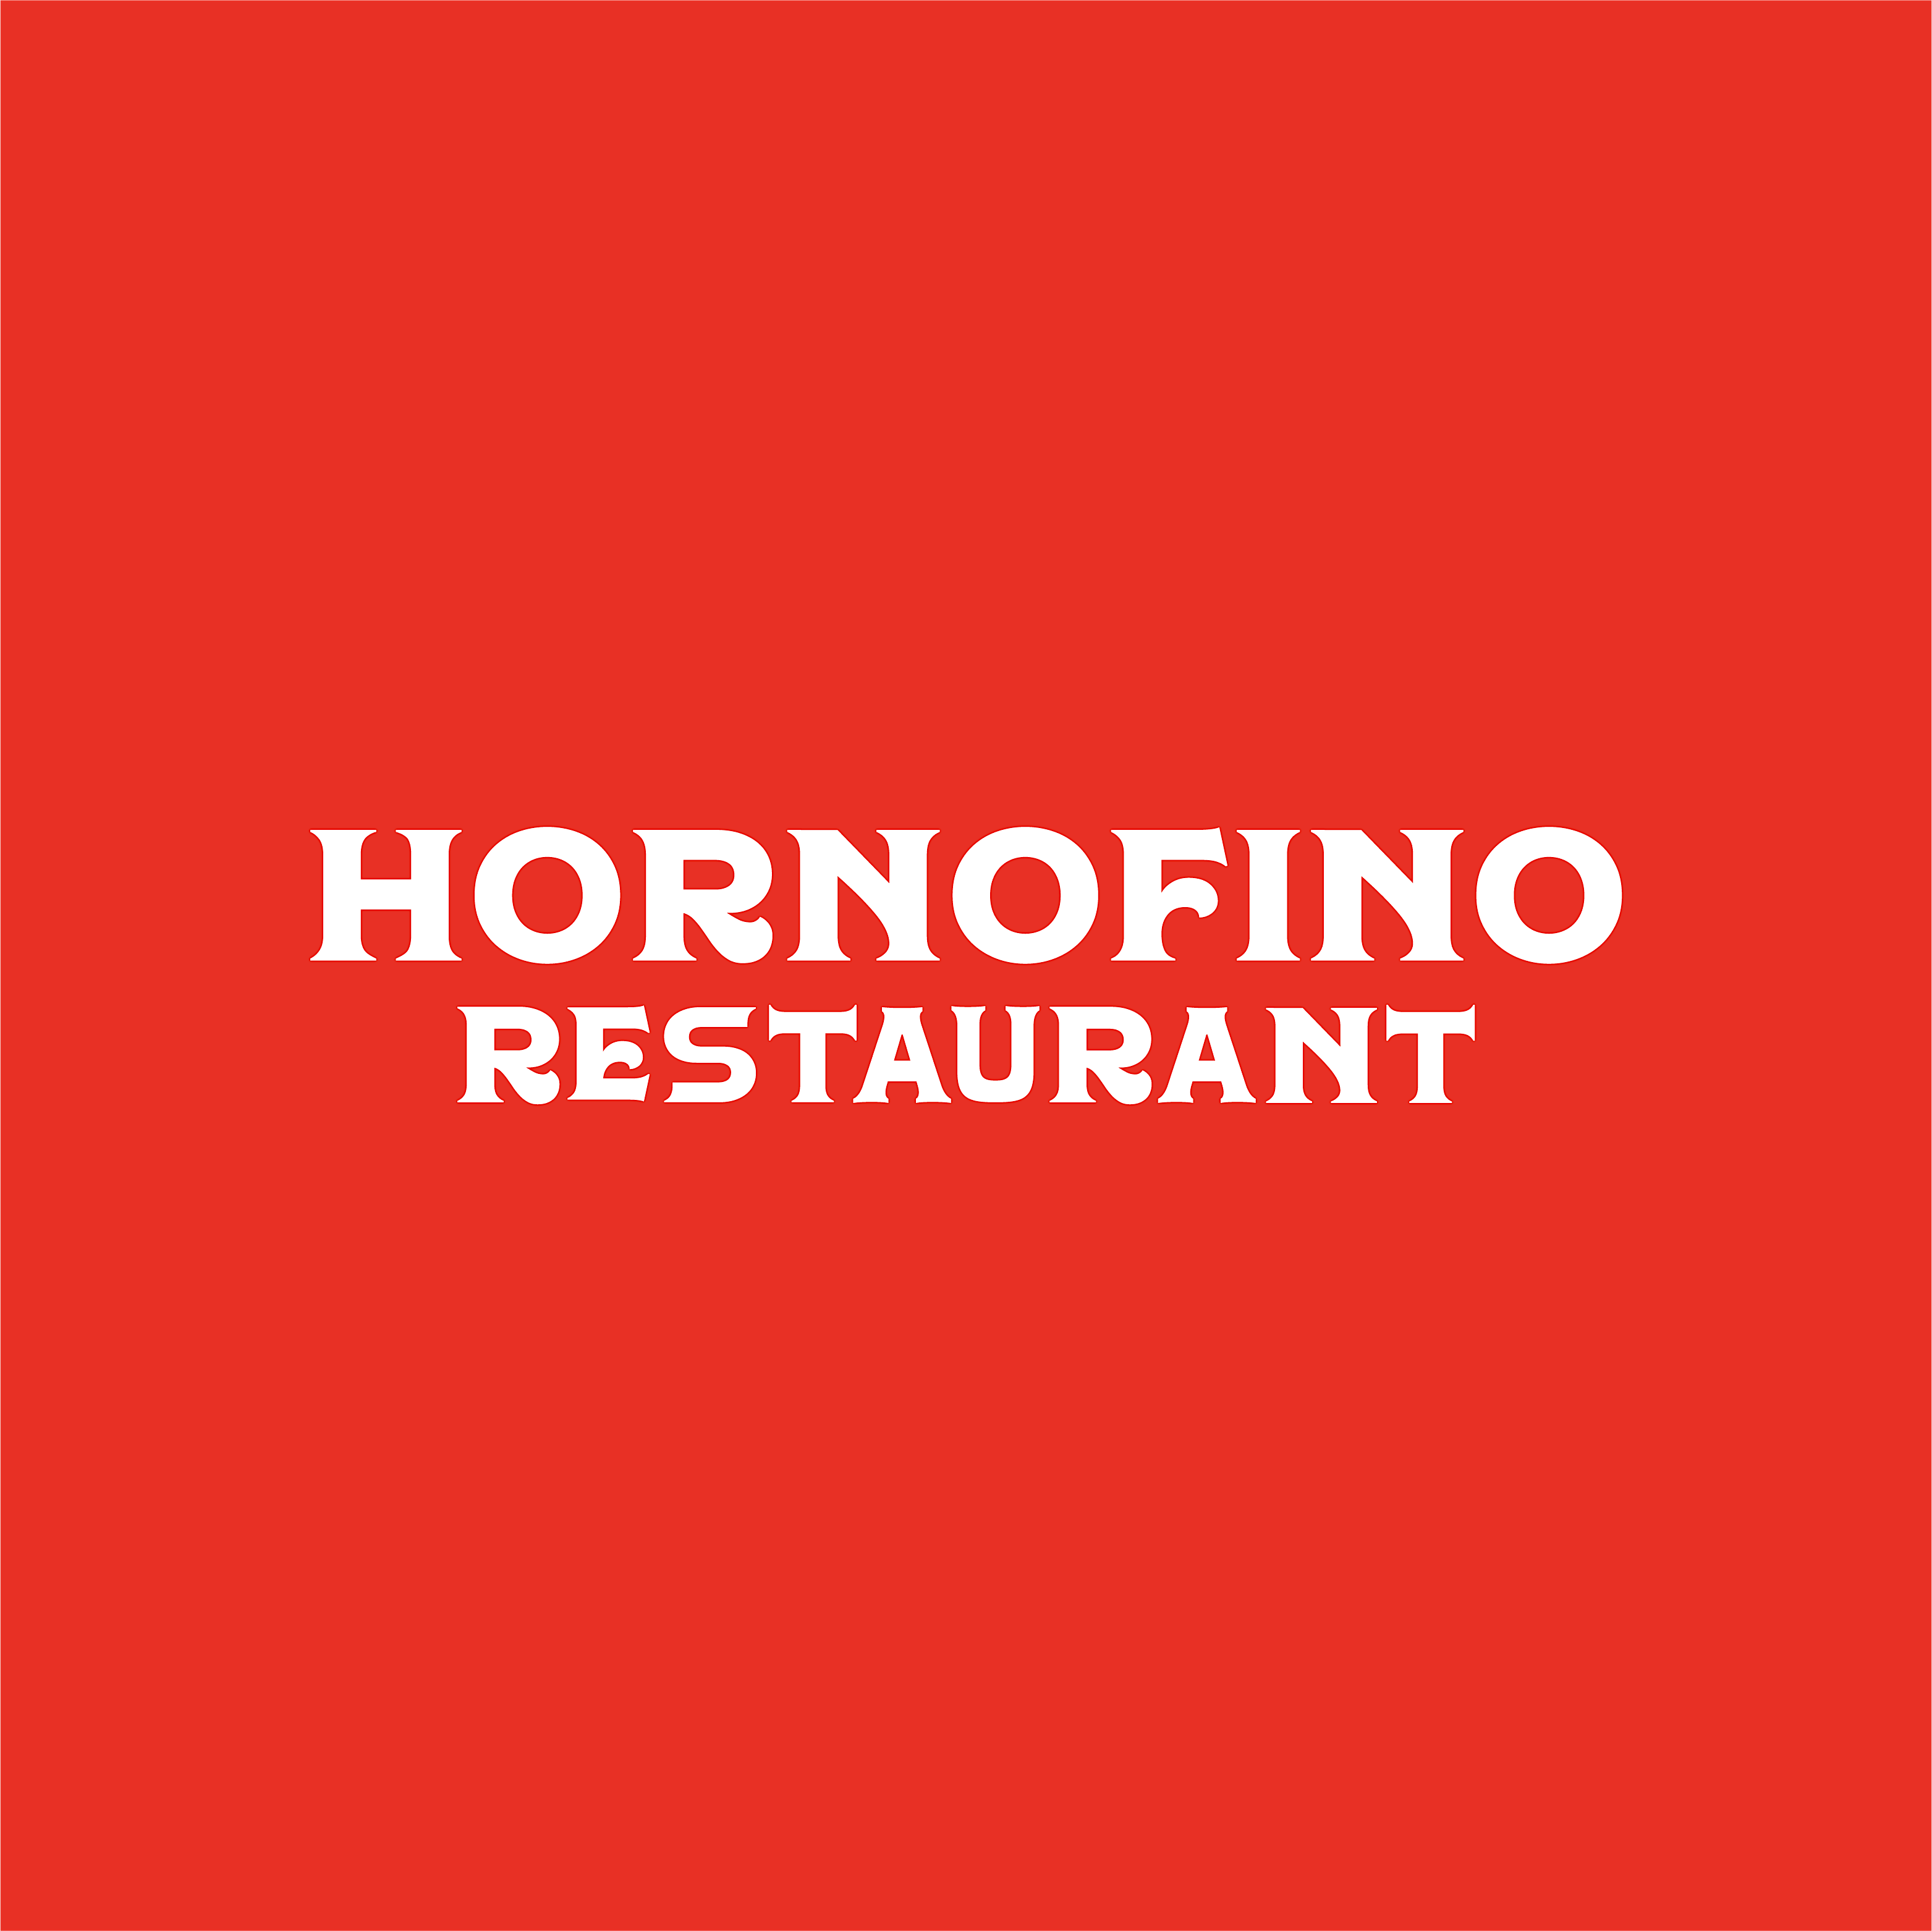 Hornofino Restaurant